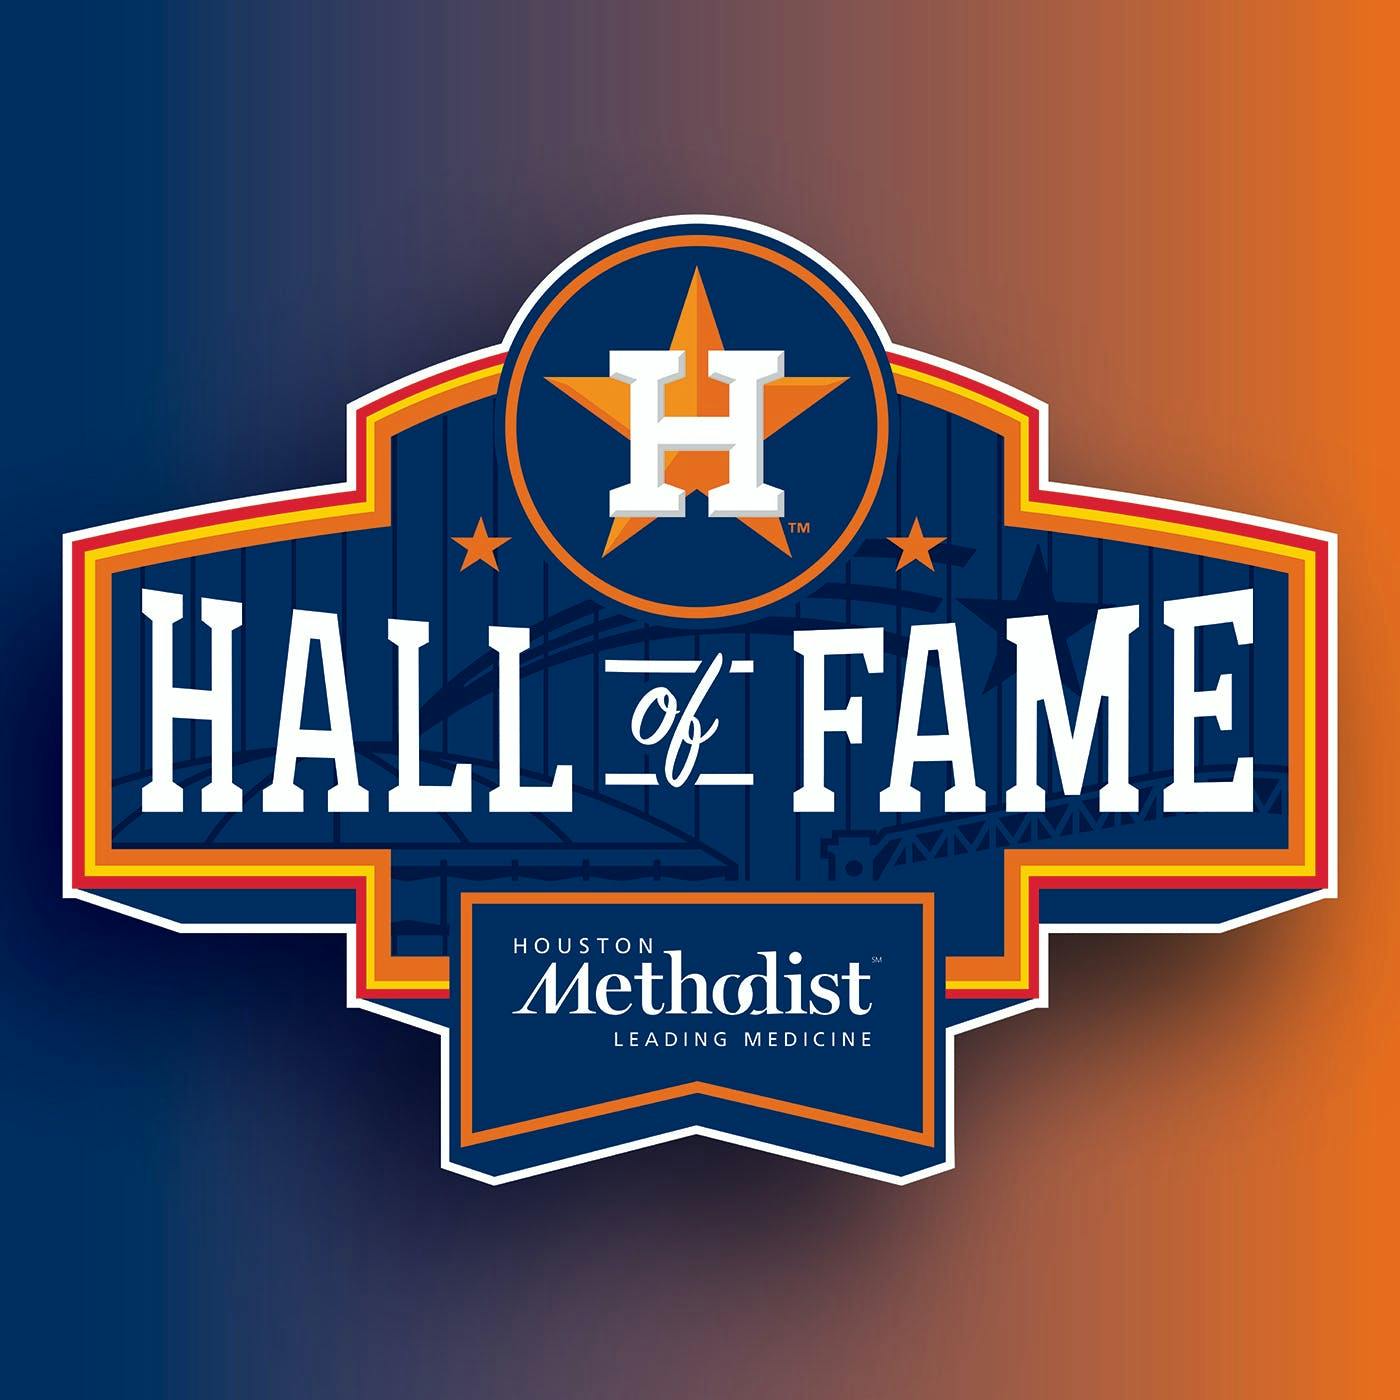 Astros Hall of Fame Podcast Series: Gene Elston